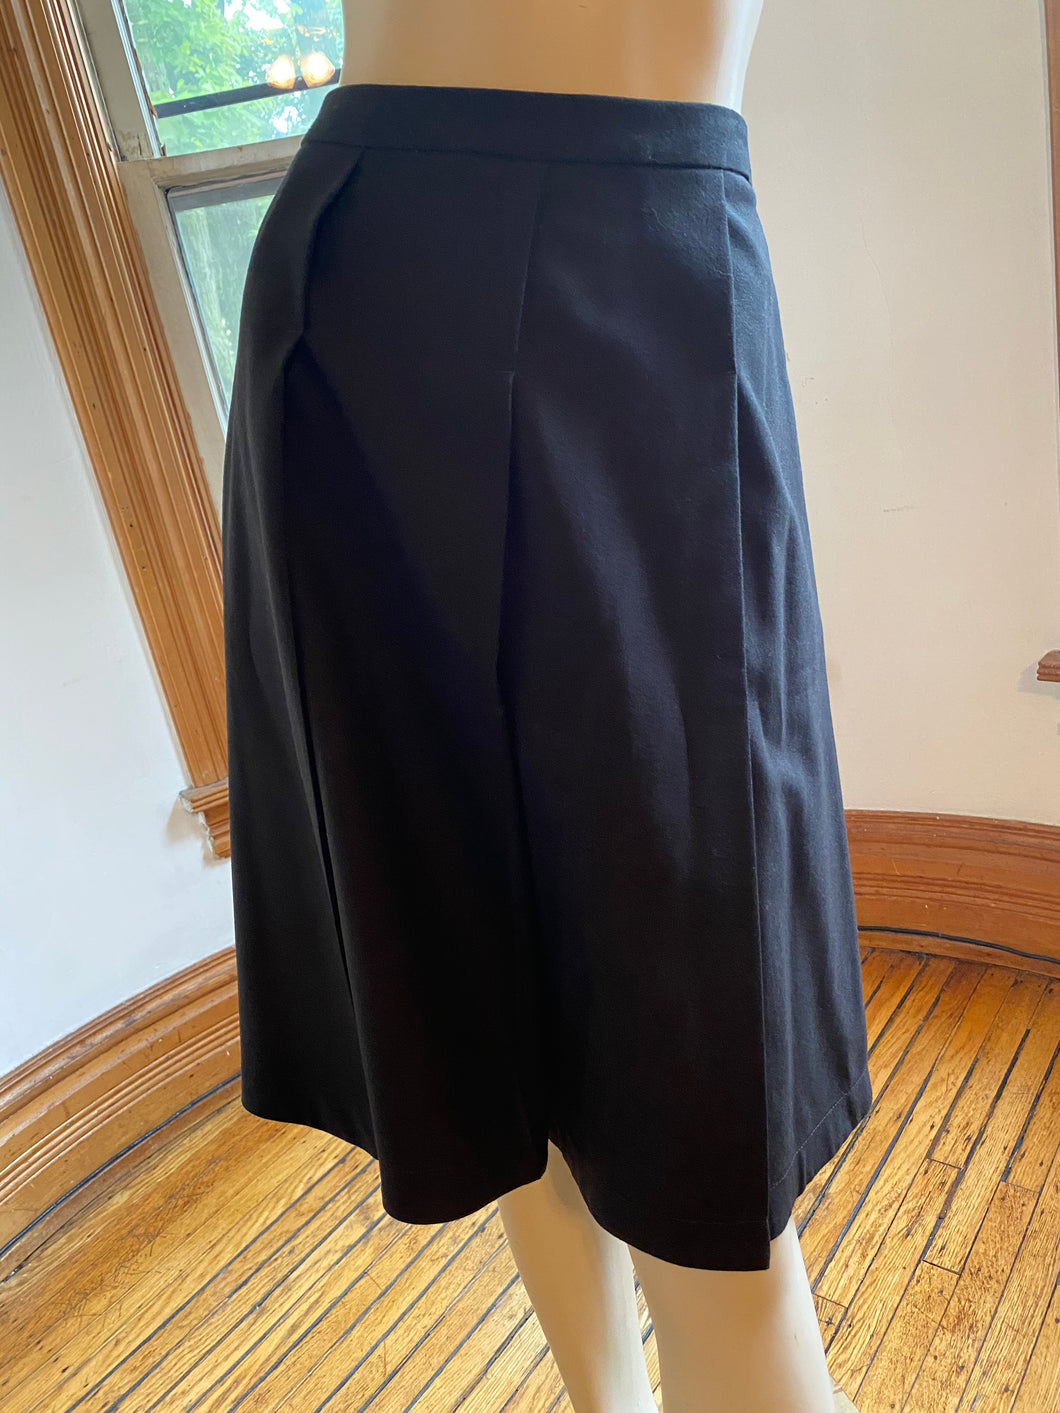 Armani Collezioni Charcoal Gray Pleated Wool Skirt, size L (US size 12)